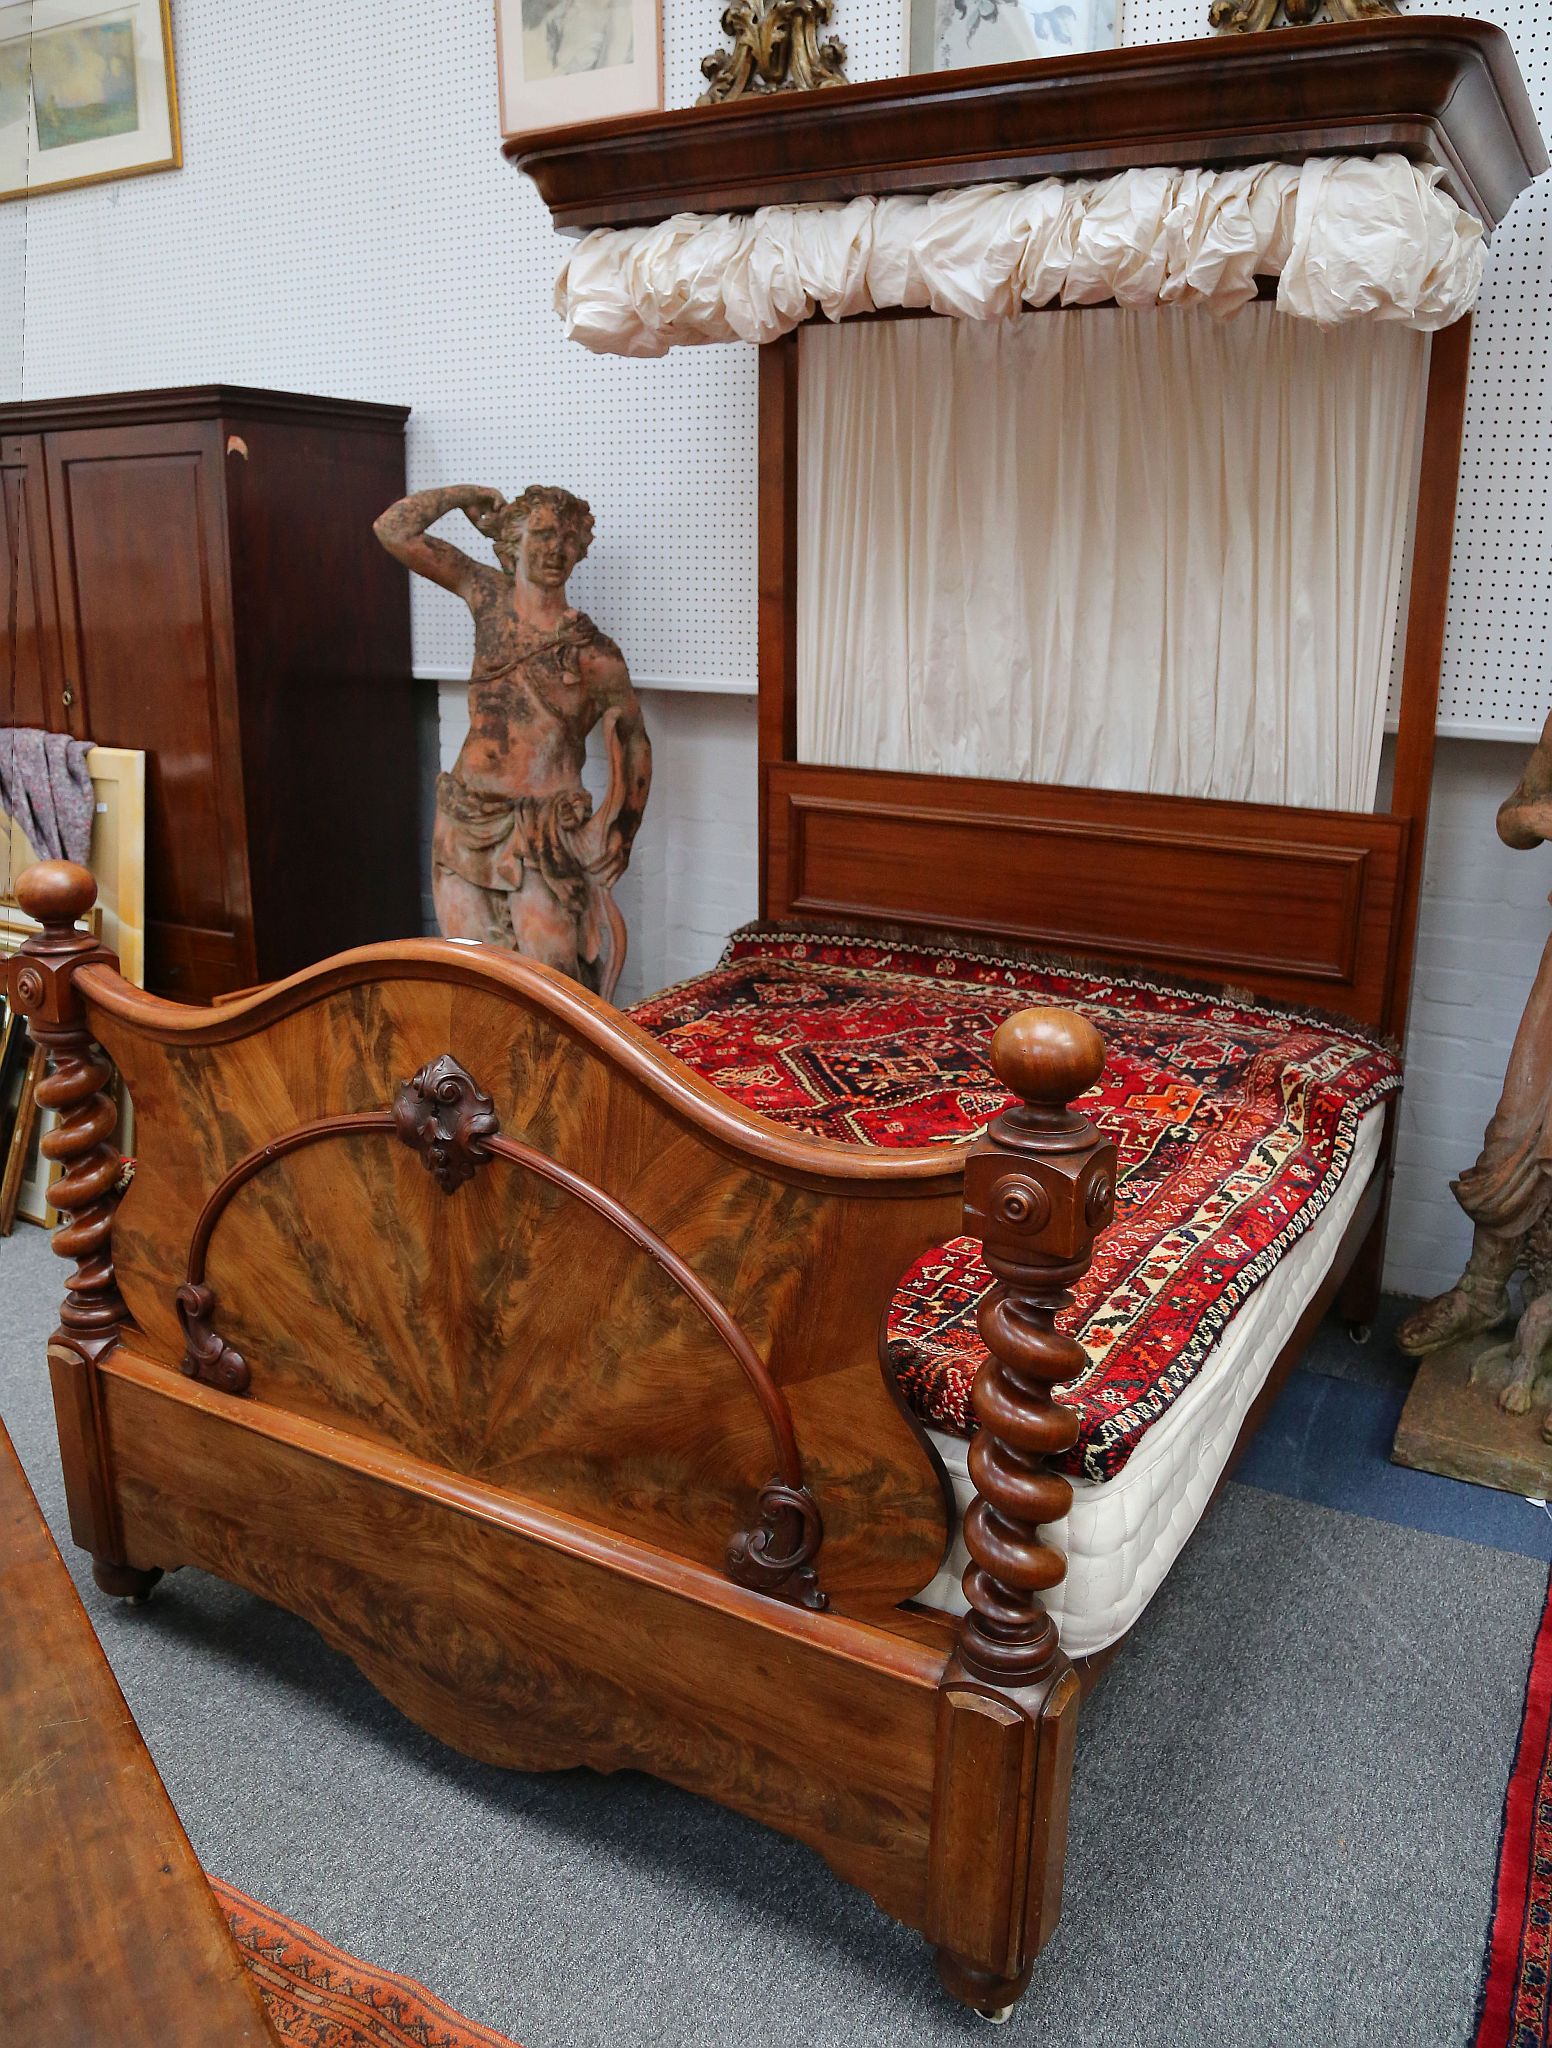 a Victorian half tester bed having a walnut veneered  cartouche form foot board between